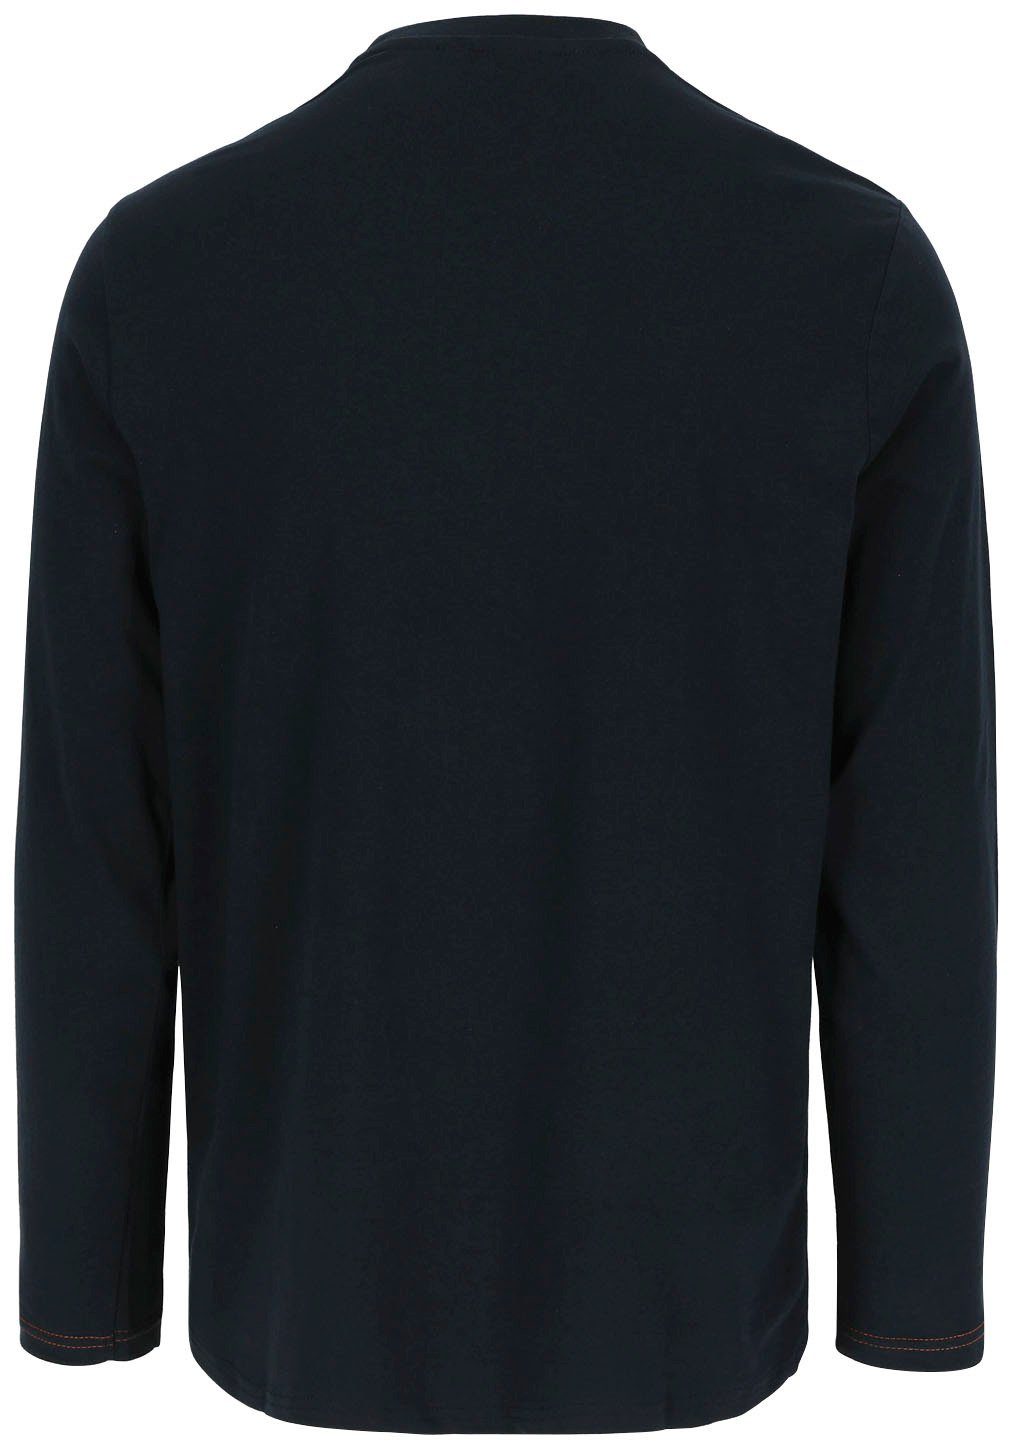 Tragegefühl, Langarmshirt angenehmes Basic Baumwolle, langärmlig vorgeschrumpfte marine Herock t-shirt 100 Noet %